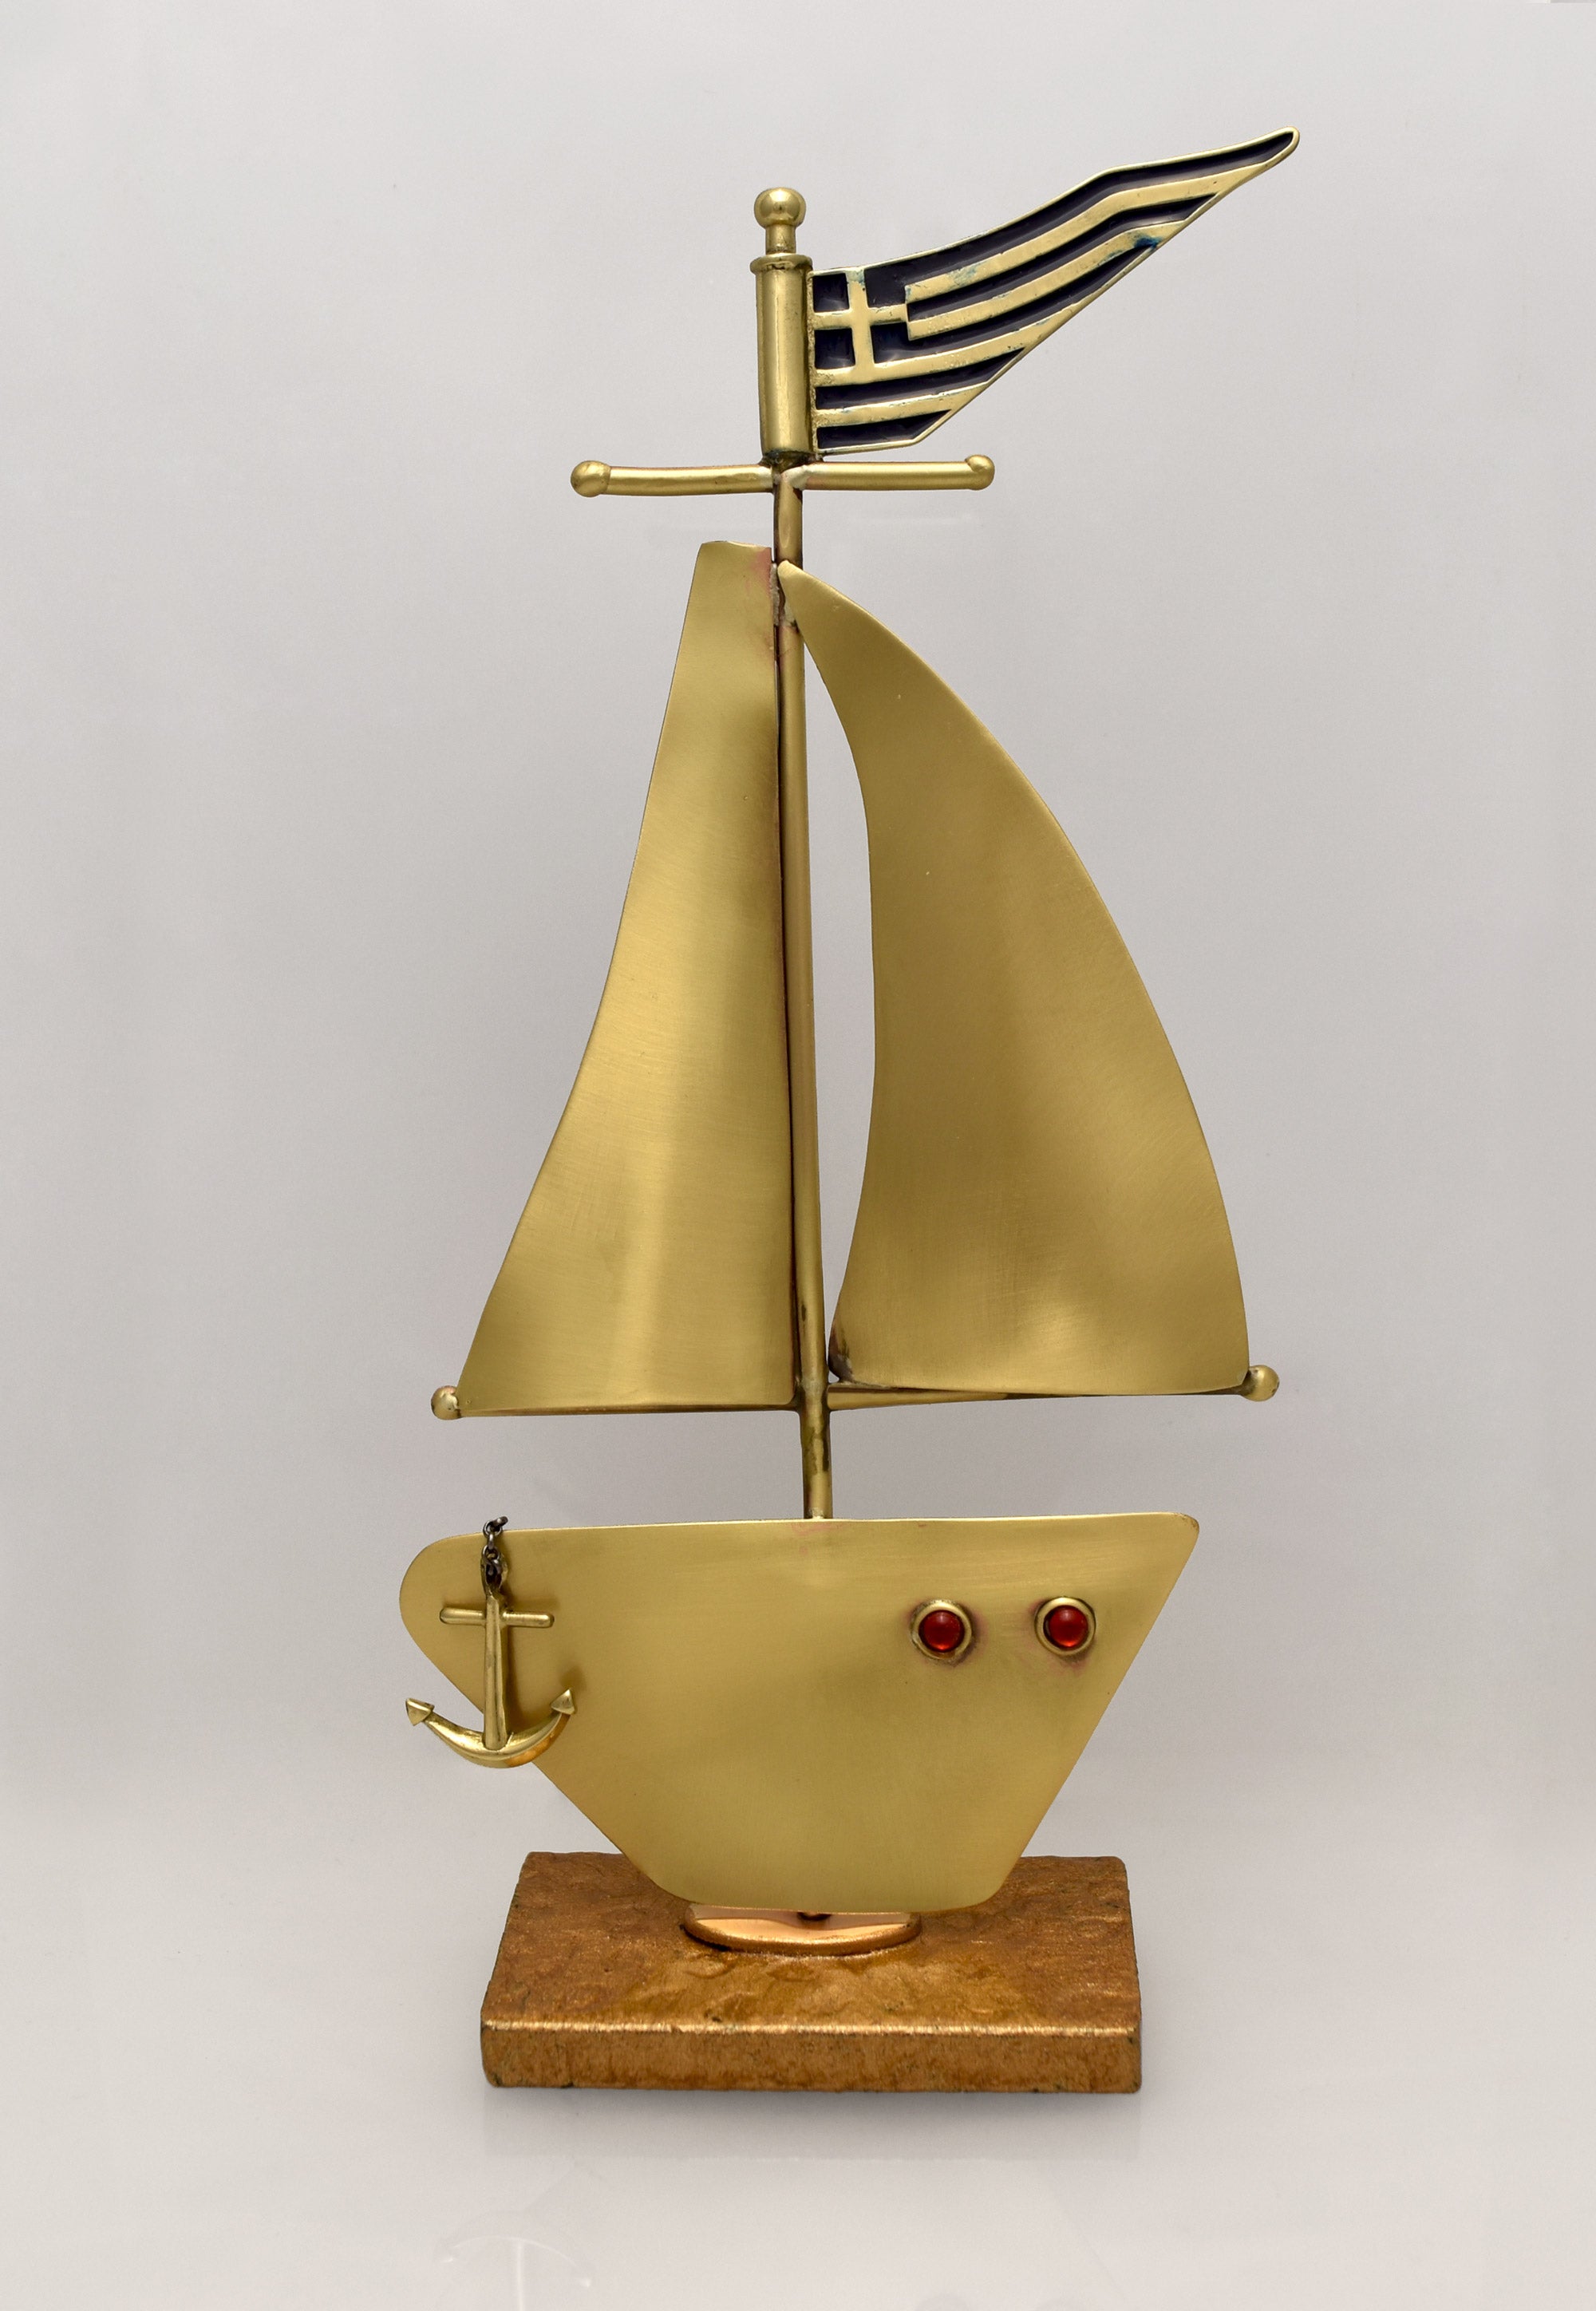 Sailboat - Decorative Sailboat, Home Decoration, Welcome Gift, Wall Hanger (XM-05) - ELEFTHERIOU EL